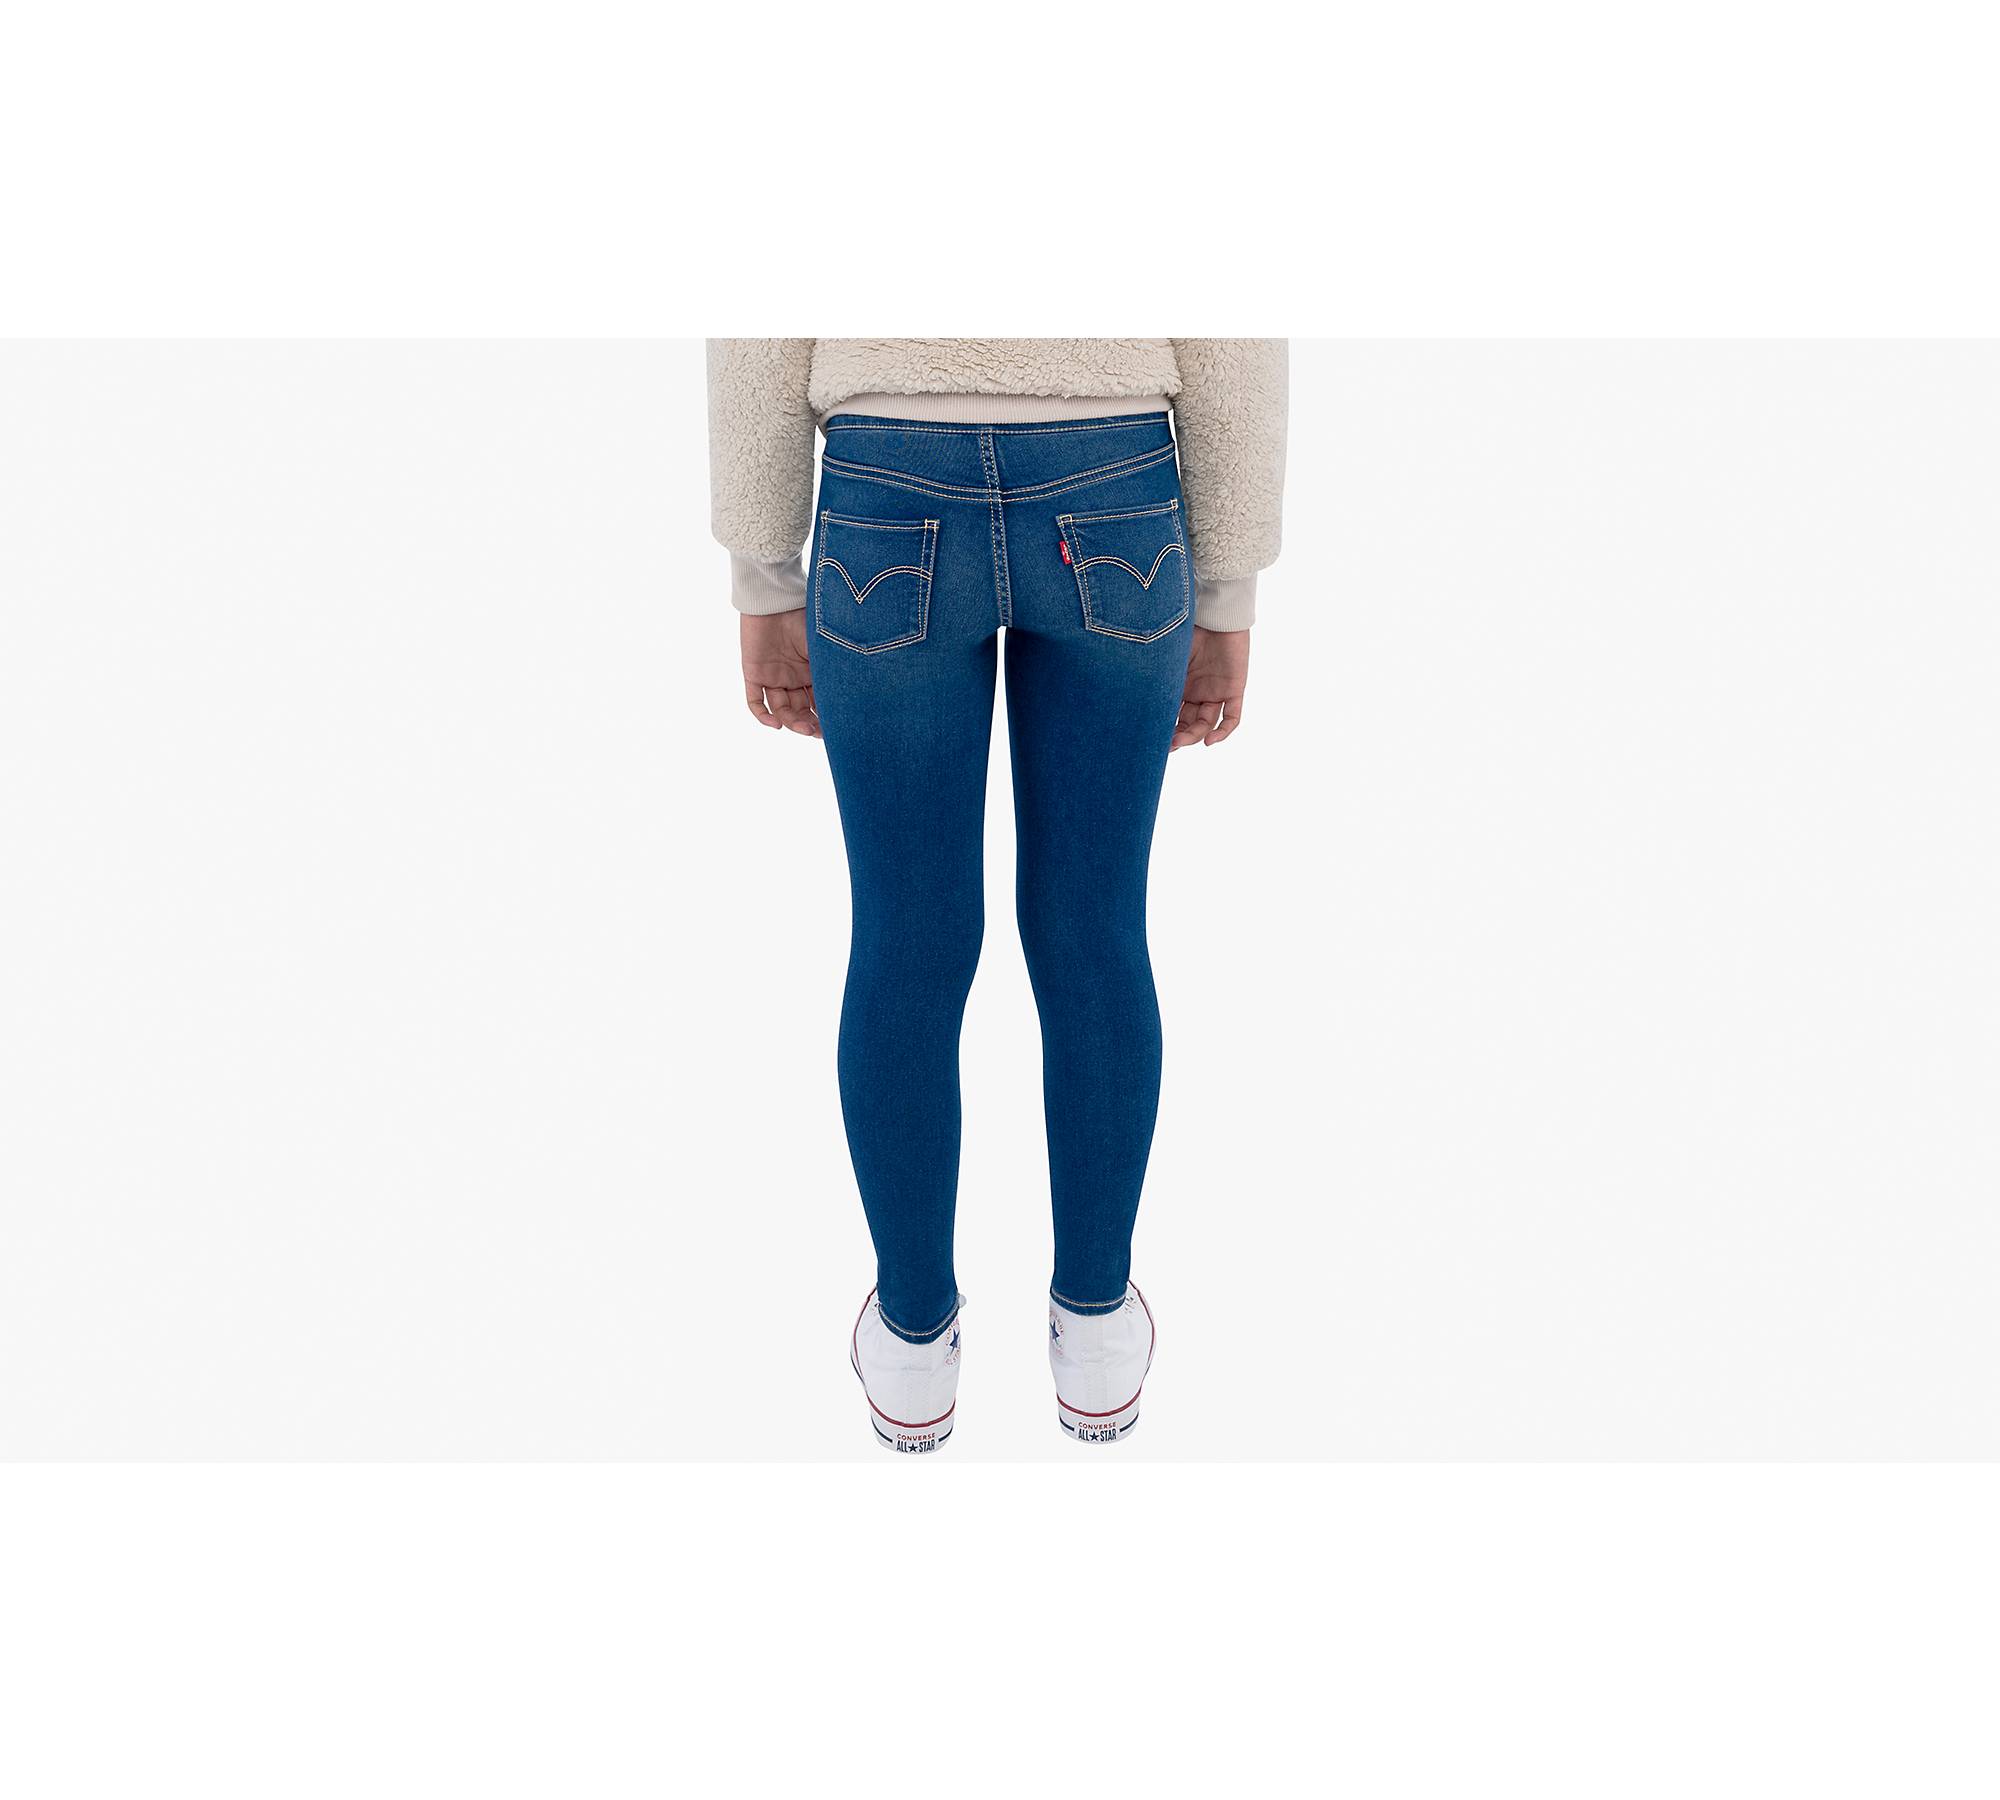 Girls' Jeans – 2 Pack Super Stretch Denim Skinny Jeans (Size: 7-16)